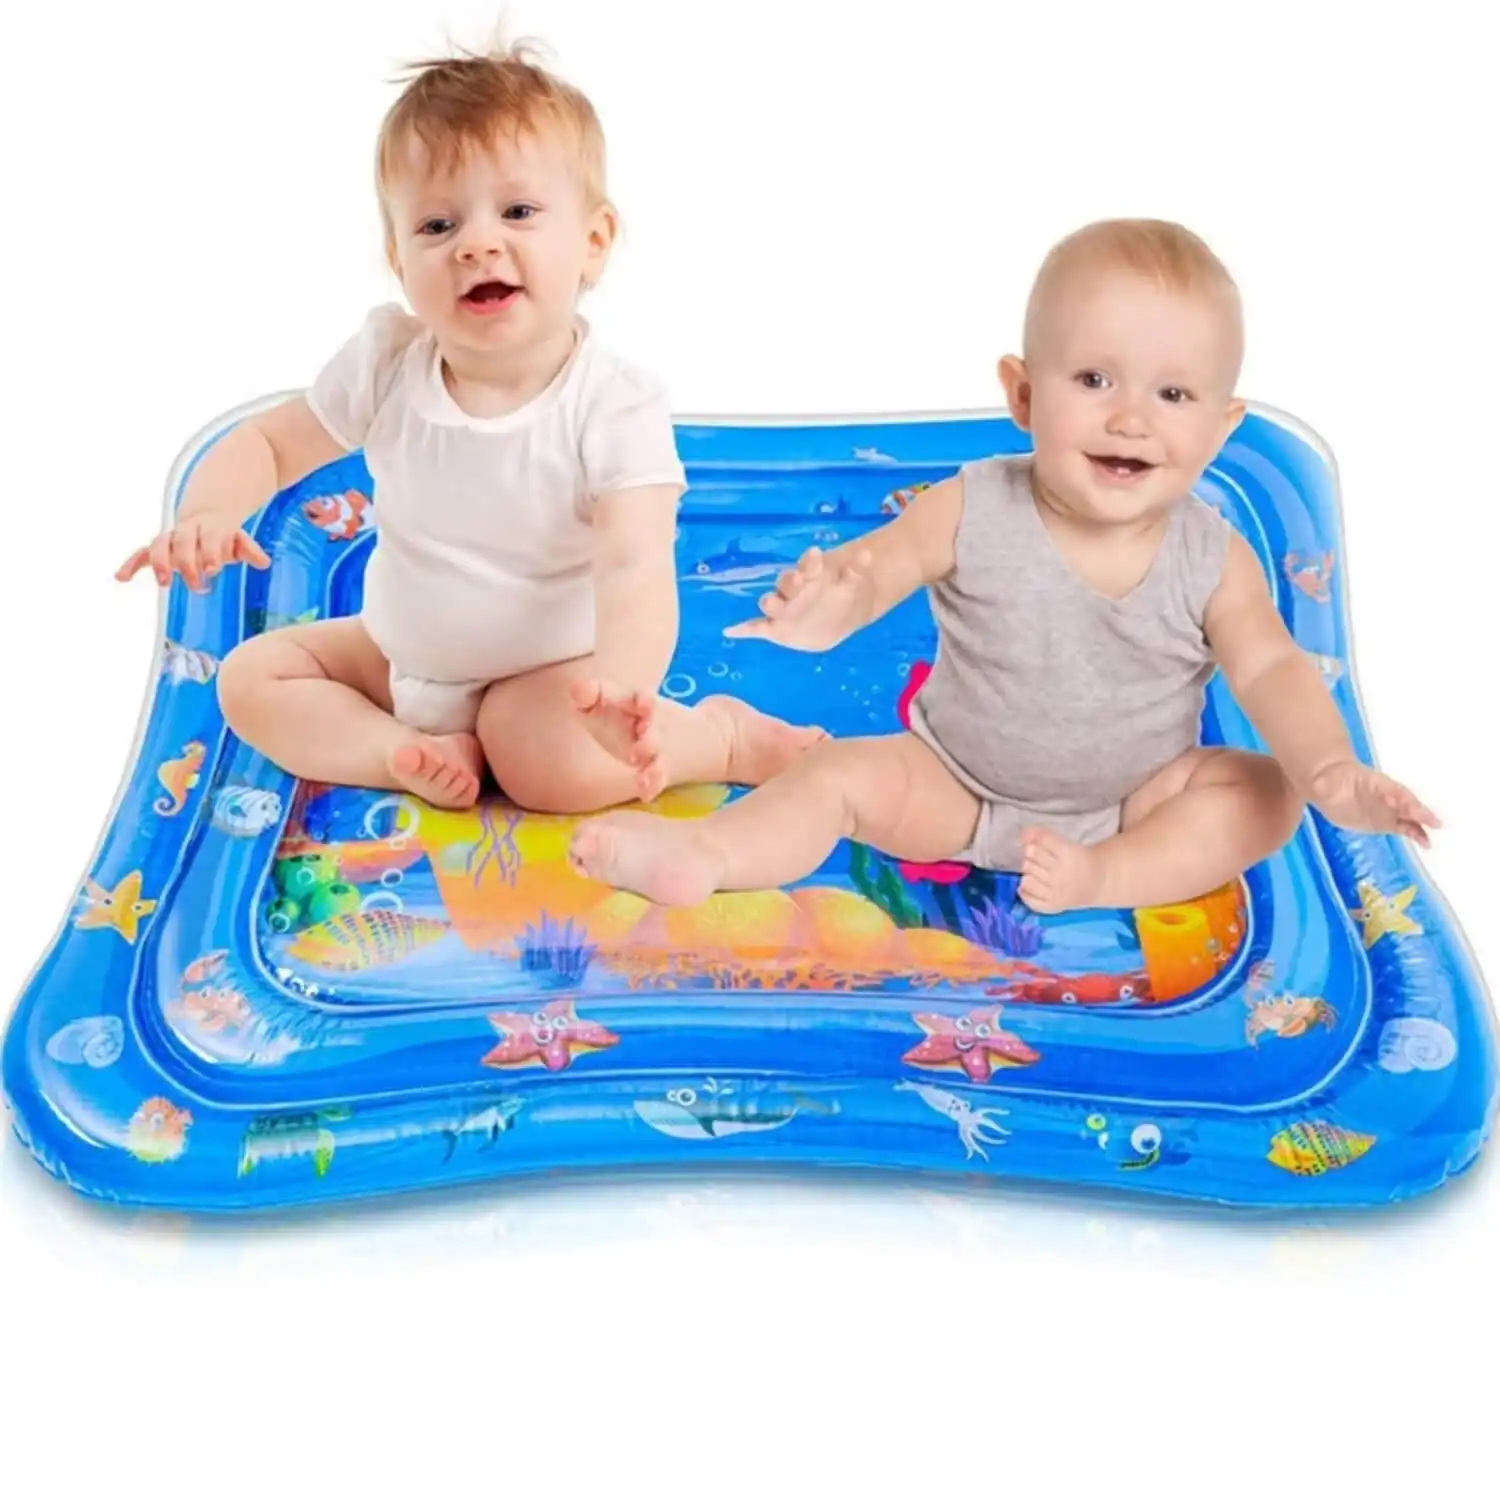 BabiesMart Tummy Time Water Play Mat Sensory Mat for Baby Play & Development